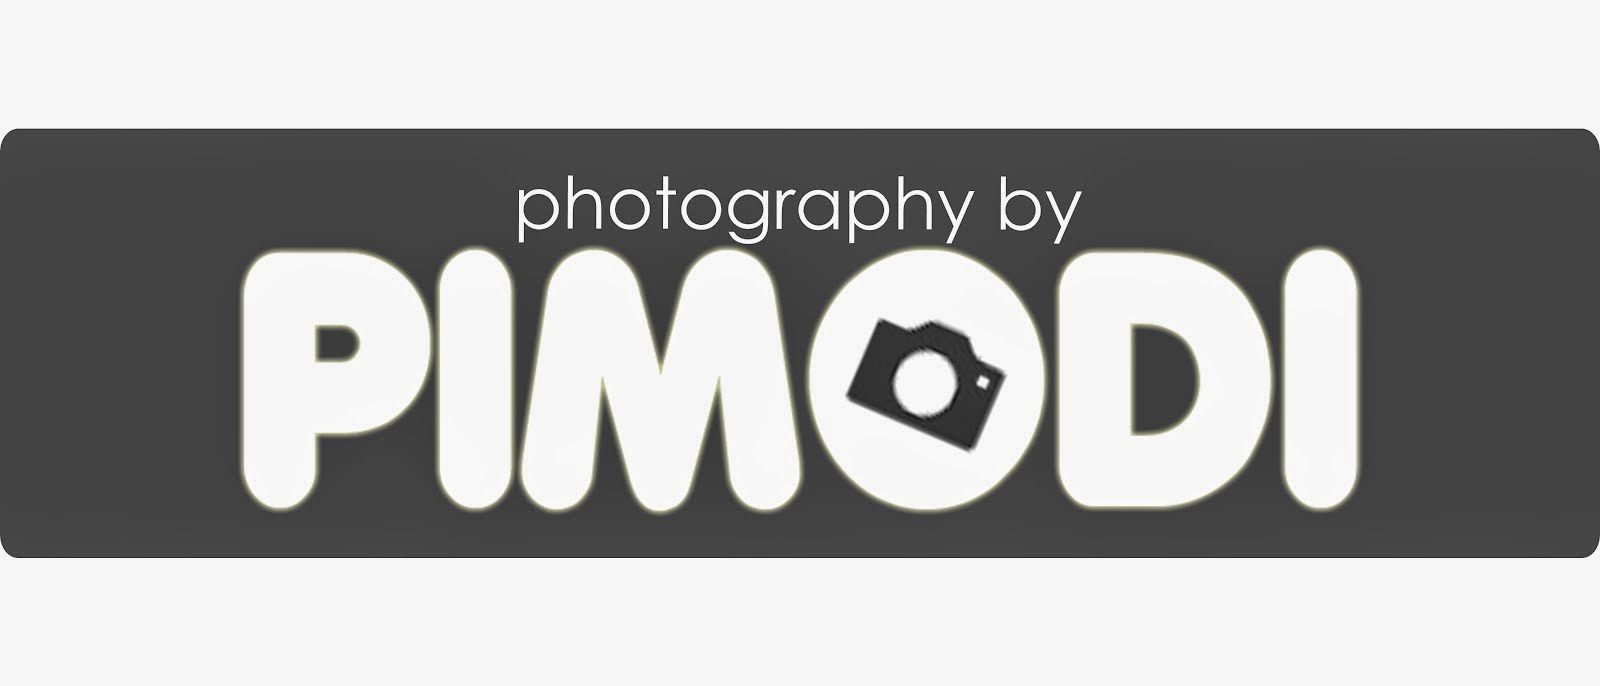 Pimodi Photography